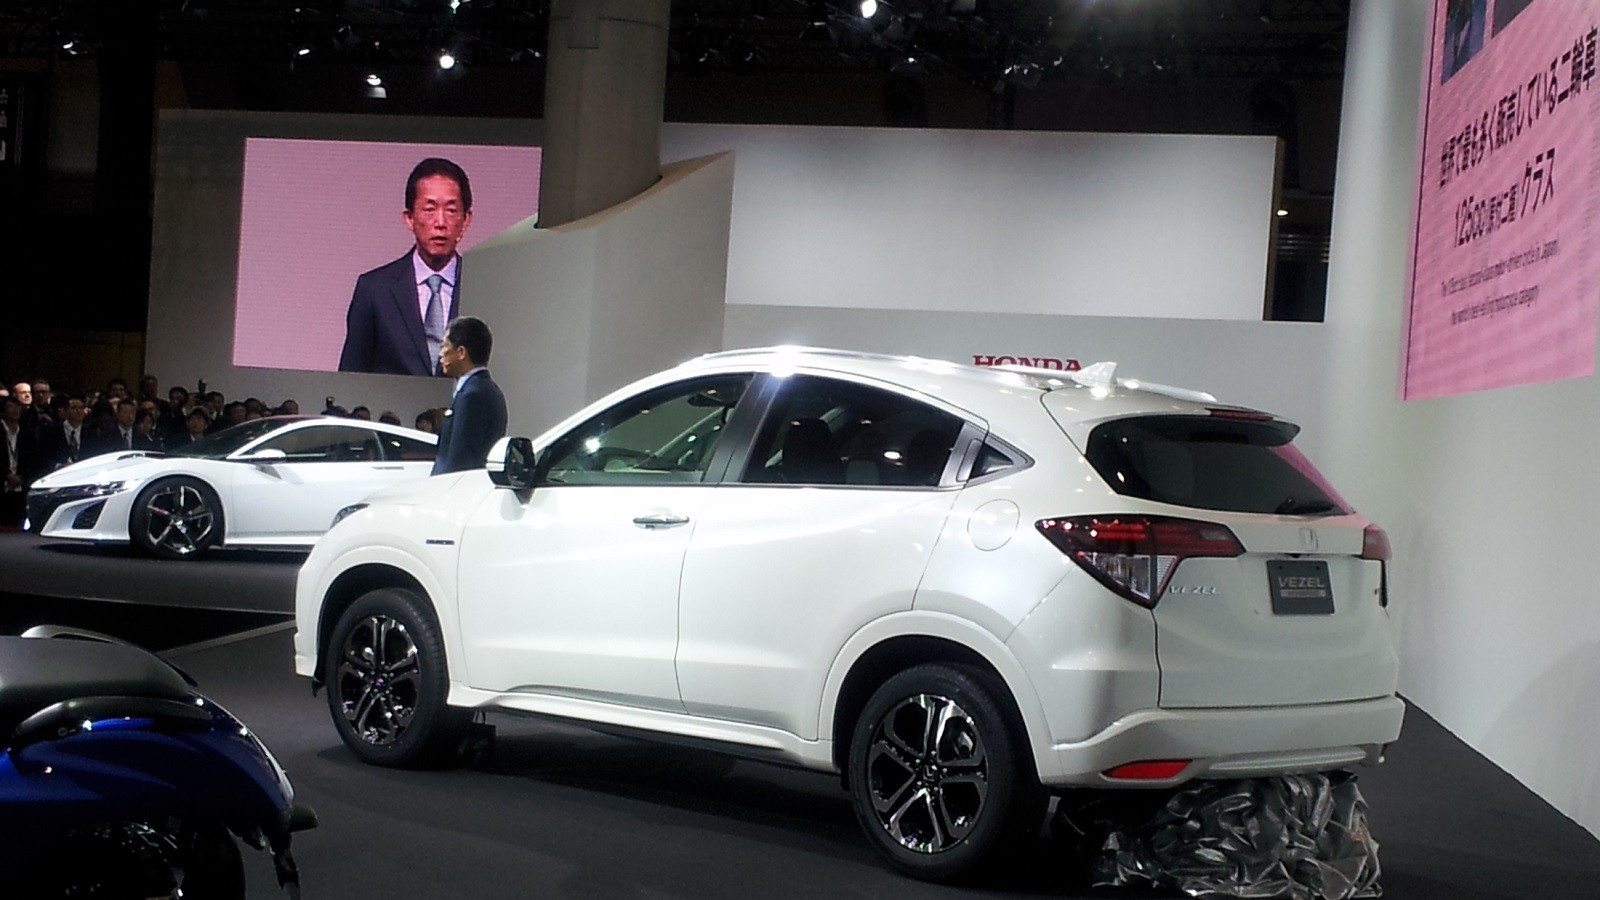 Honda Vezel (Japanese market model) at 2013 Tokyo Motor Show